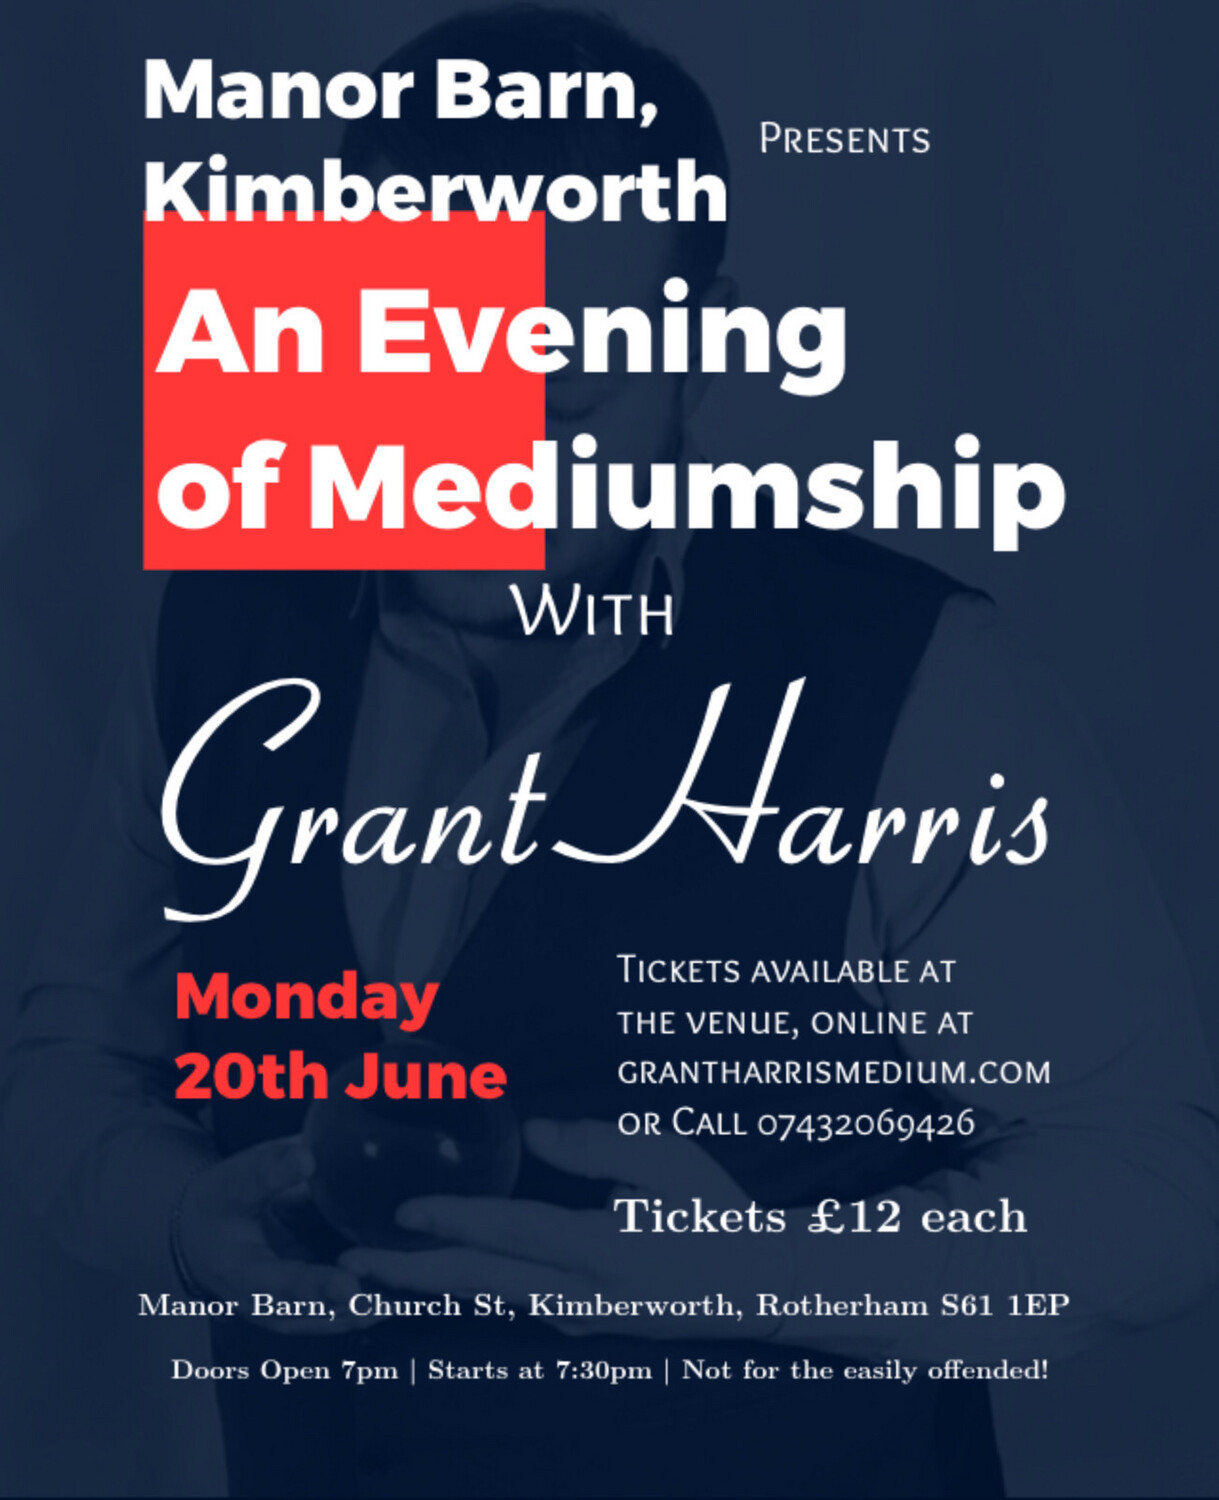 Evening of Mediumship, The Manor Barn, Kimberworth, Mon 20th June 2022